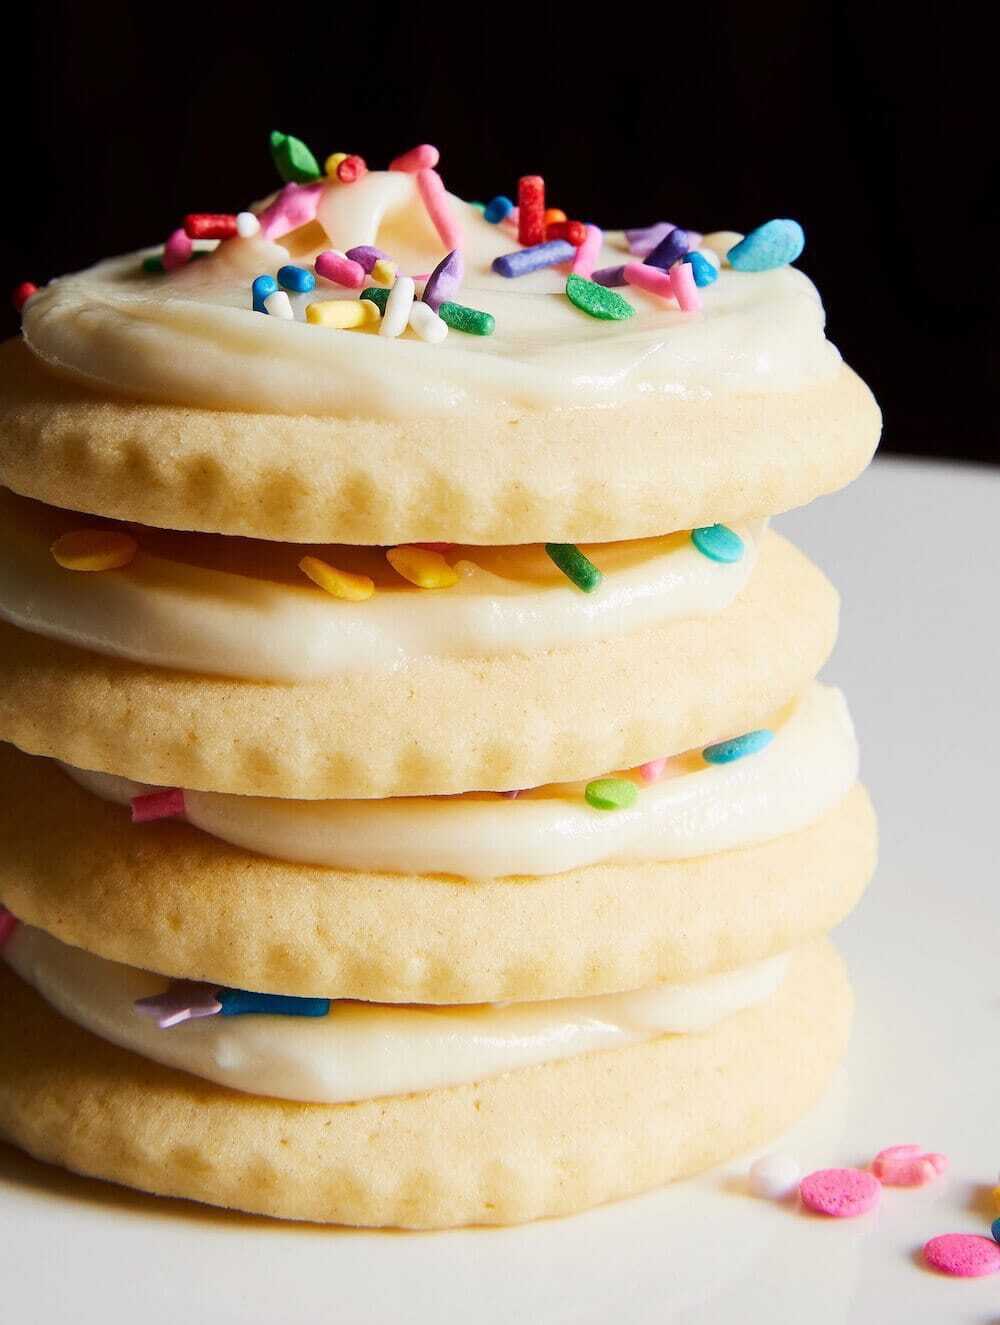  galletas de azúcar suave apiladas con chispas de arco iris